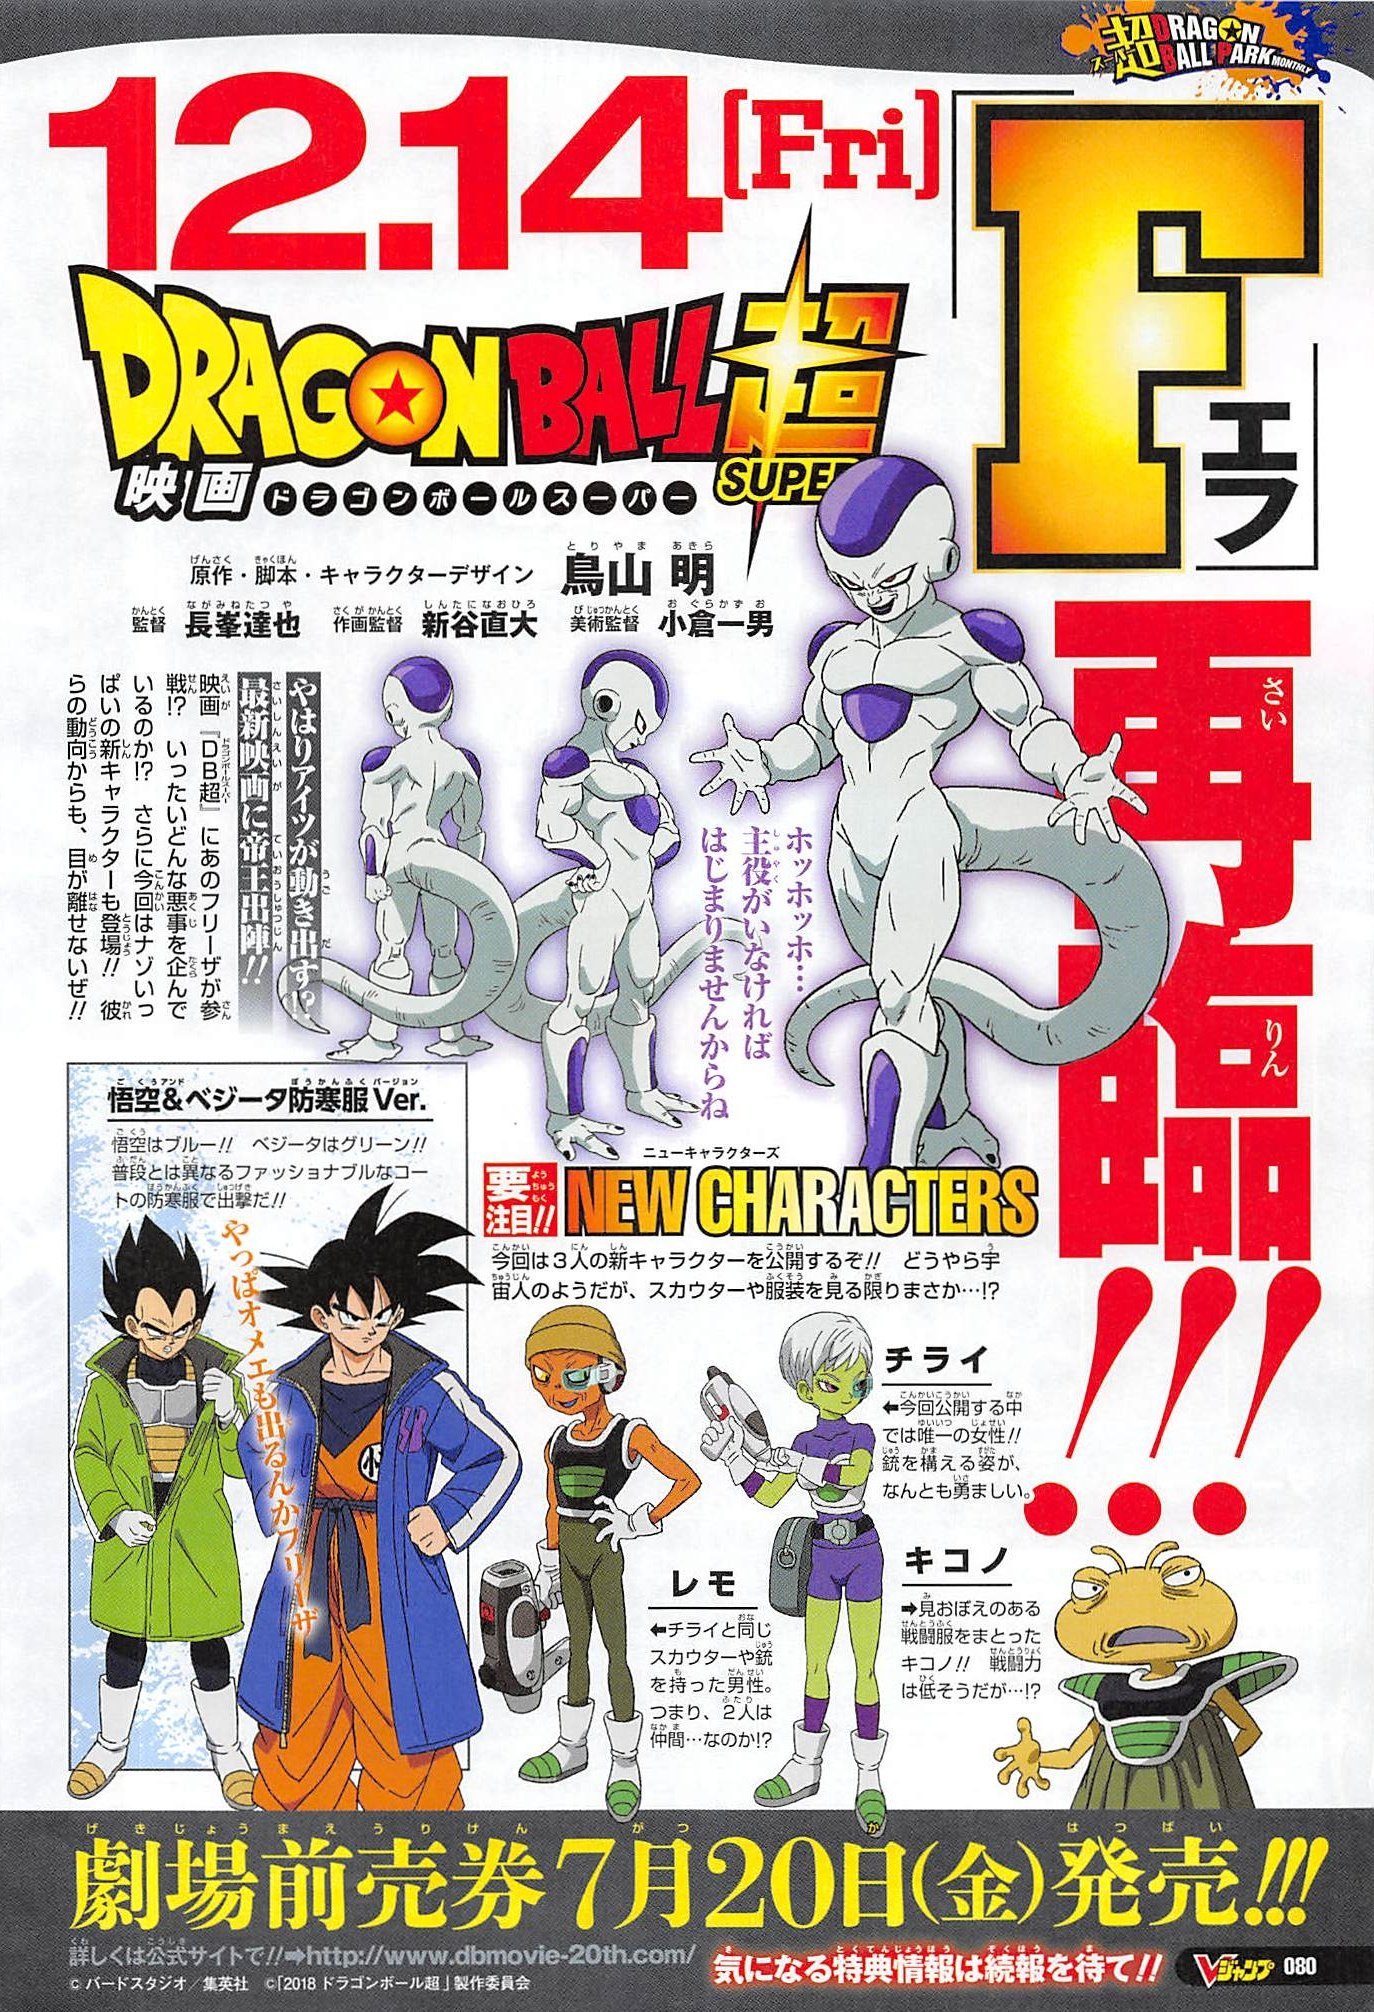 Dragon Ball Super: Broly terá adaptação em mangá - NerdBunker